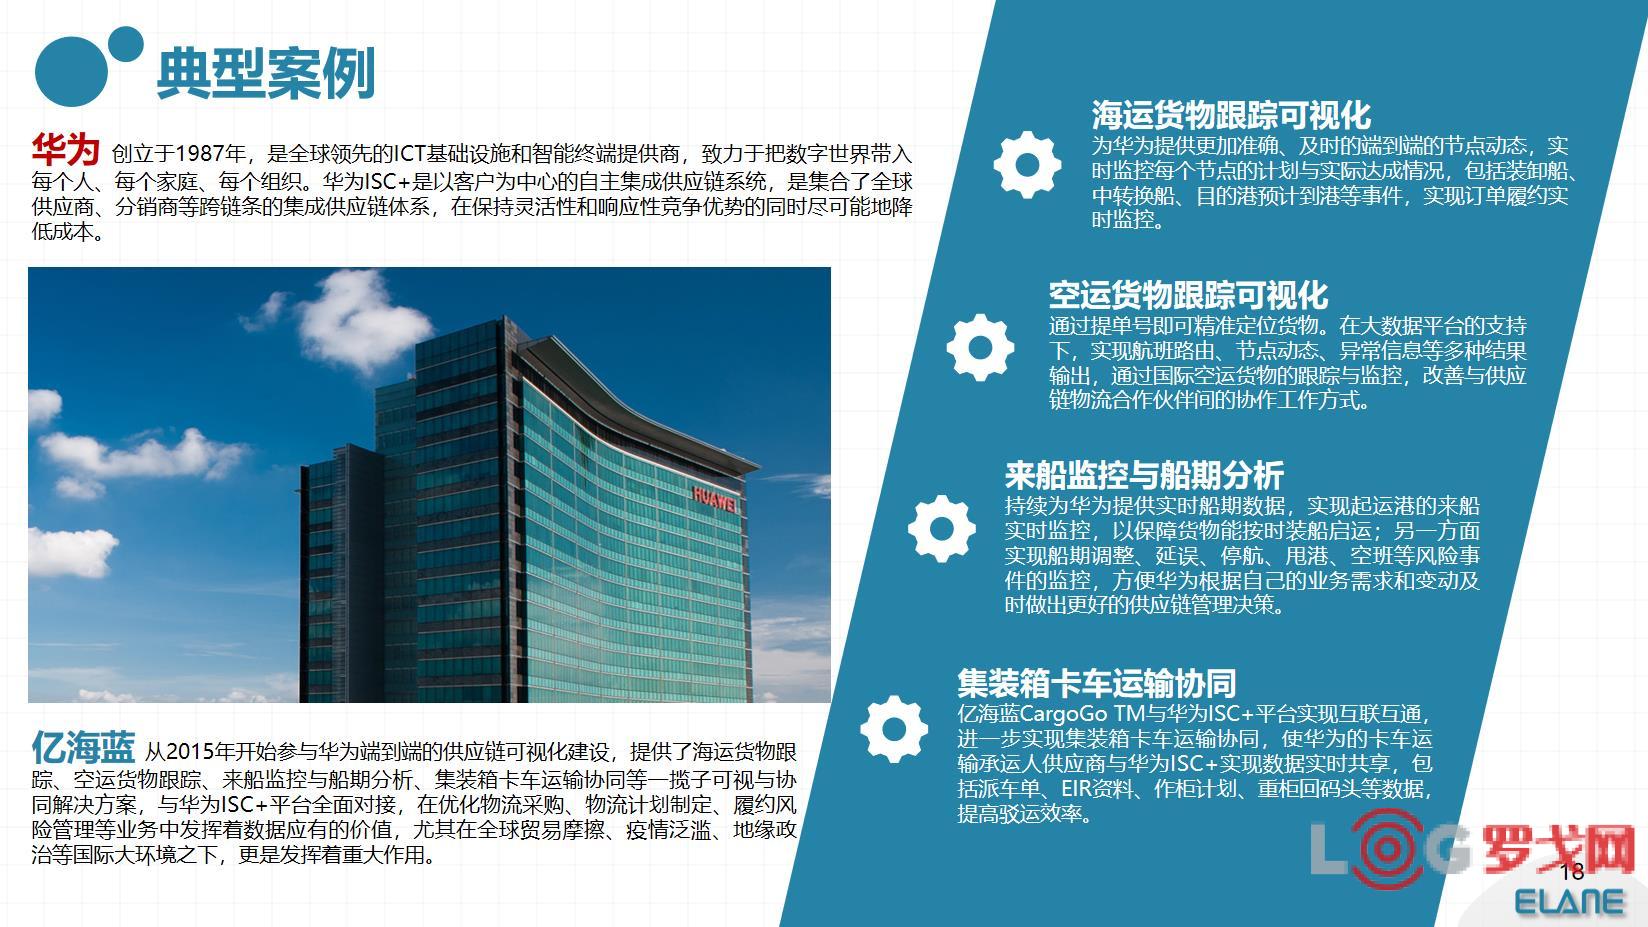 2022 LOG最具创新力供应链&物流科技企业——亿海蓝（北京）数据技术股份公司